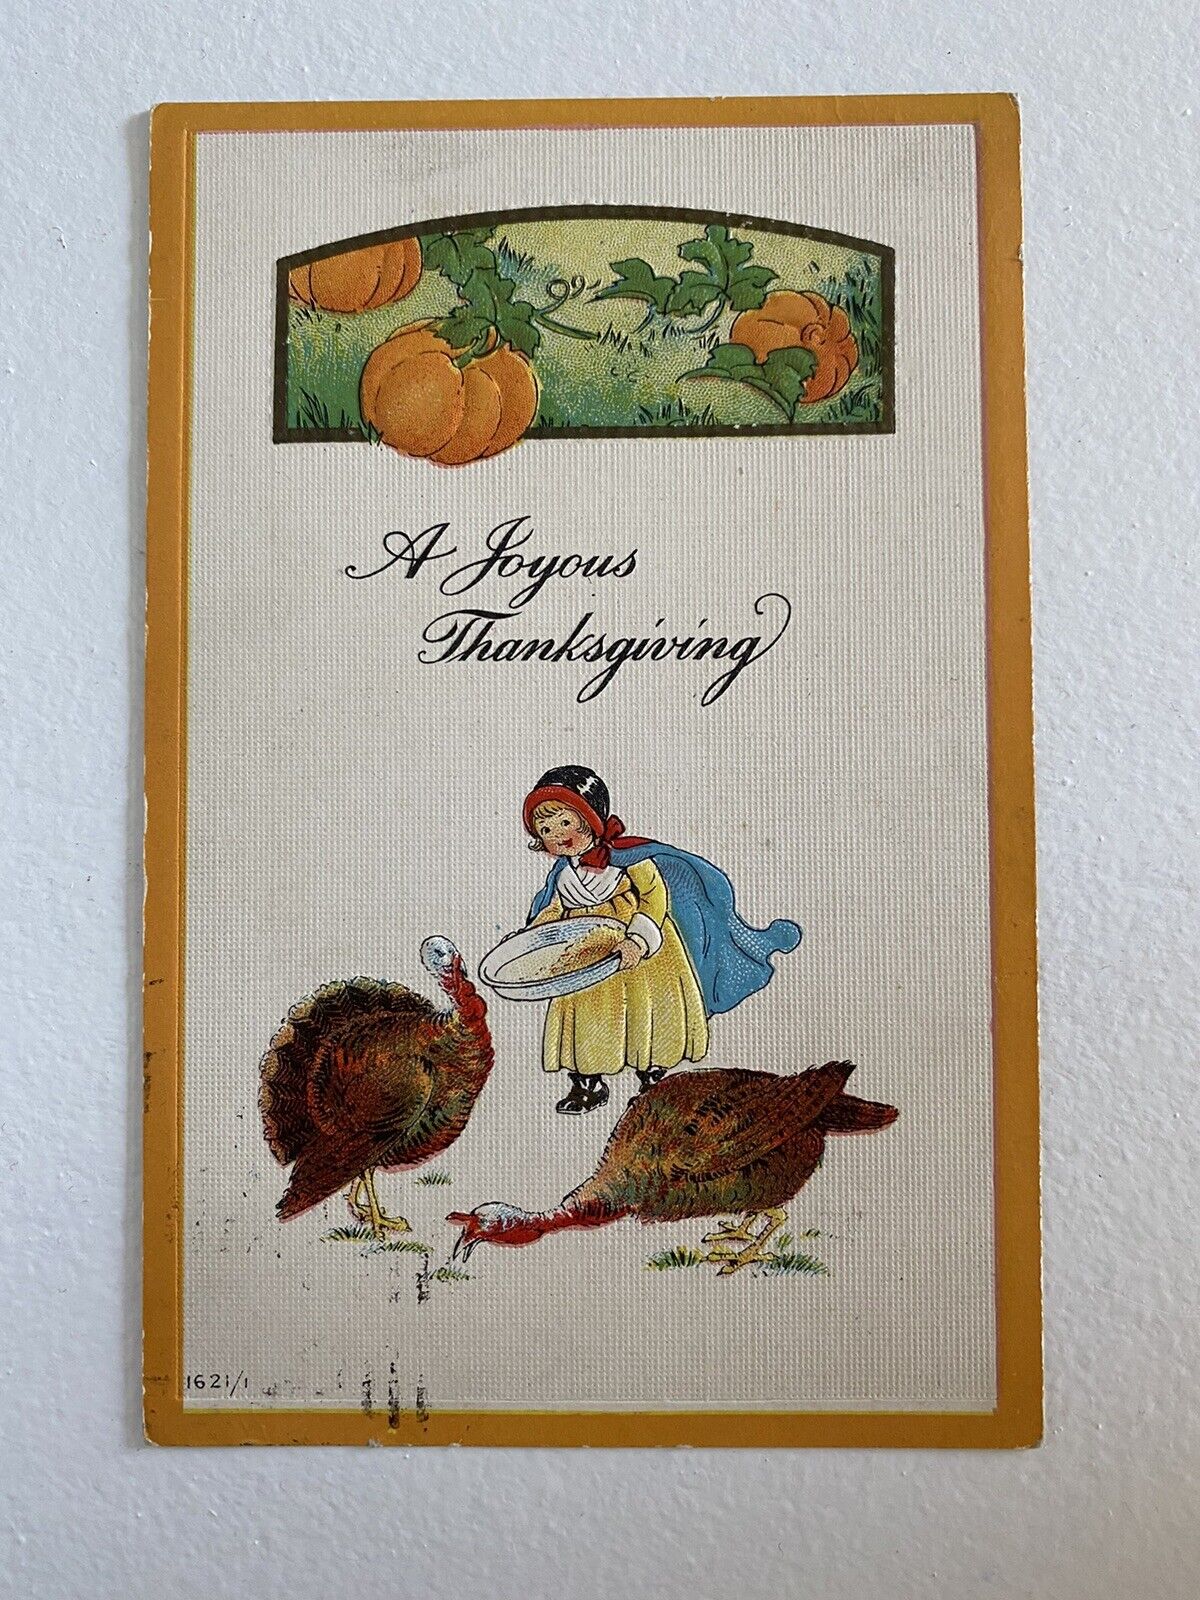 Rare 1913 Bergman NY - Thanksgiving Postcard Turkeys 1621/1, embossed.  Vintage